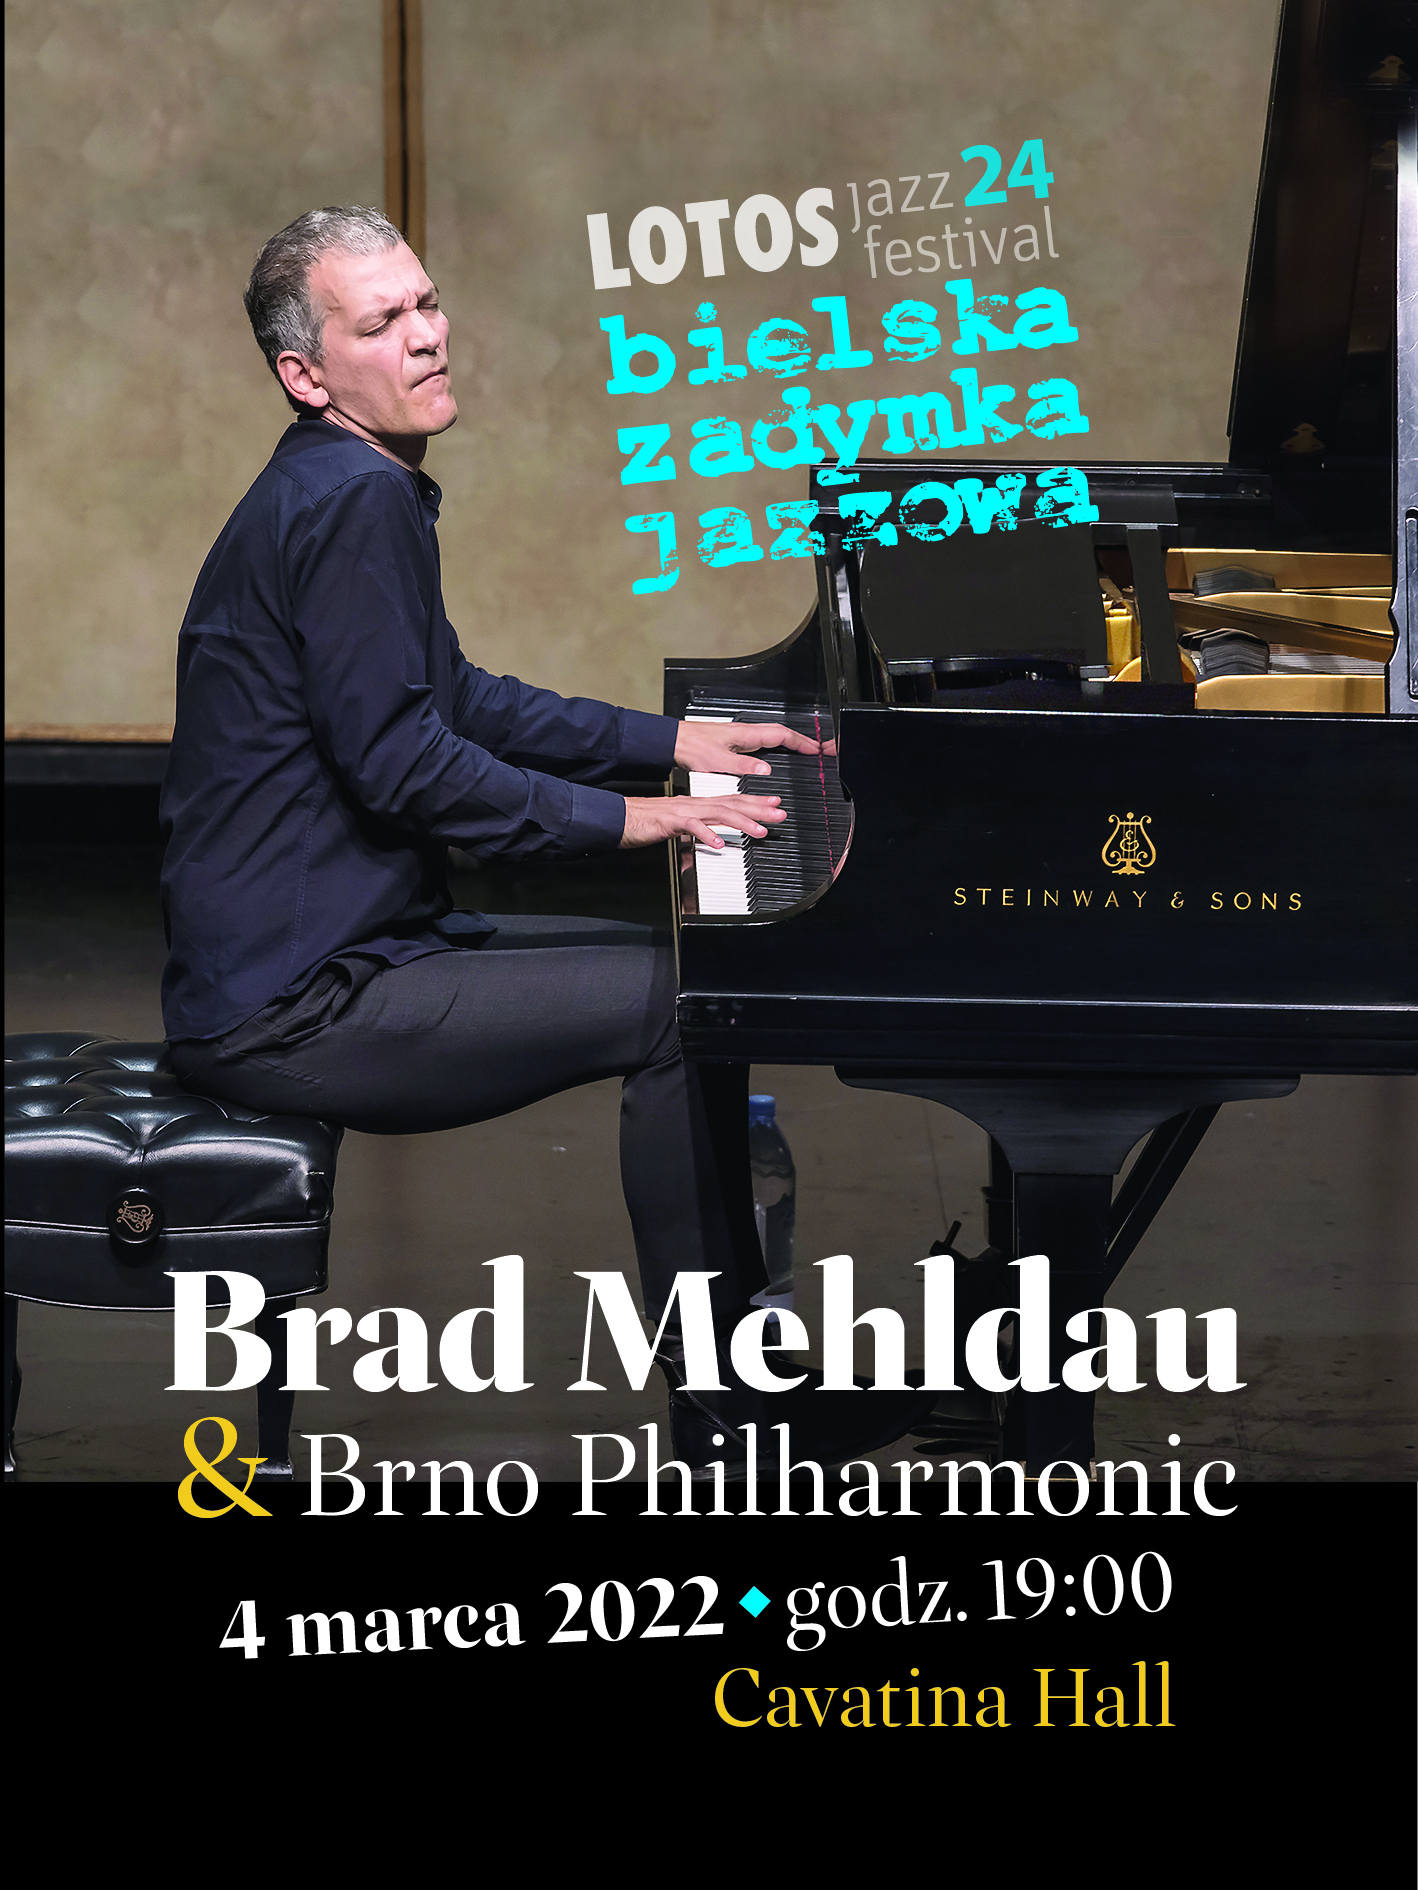  Brad Mehldau & Brno Philharmonic Na zdjęciu fragment plakatu koncertu